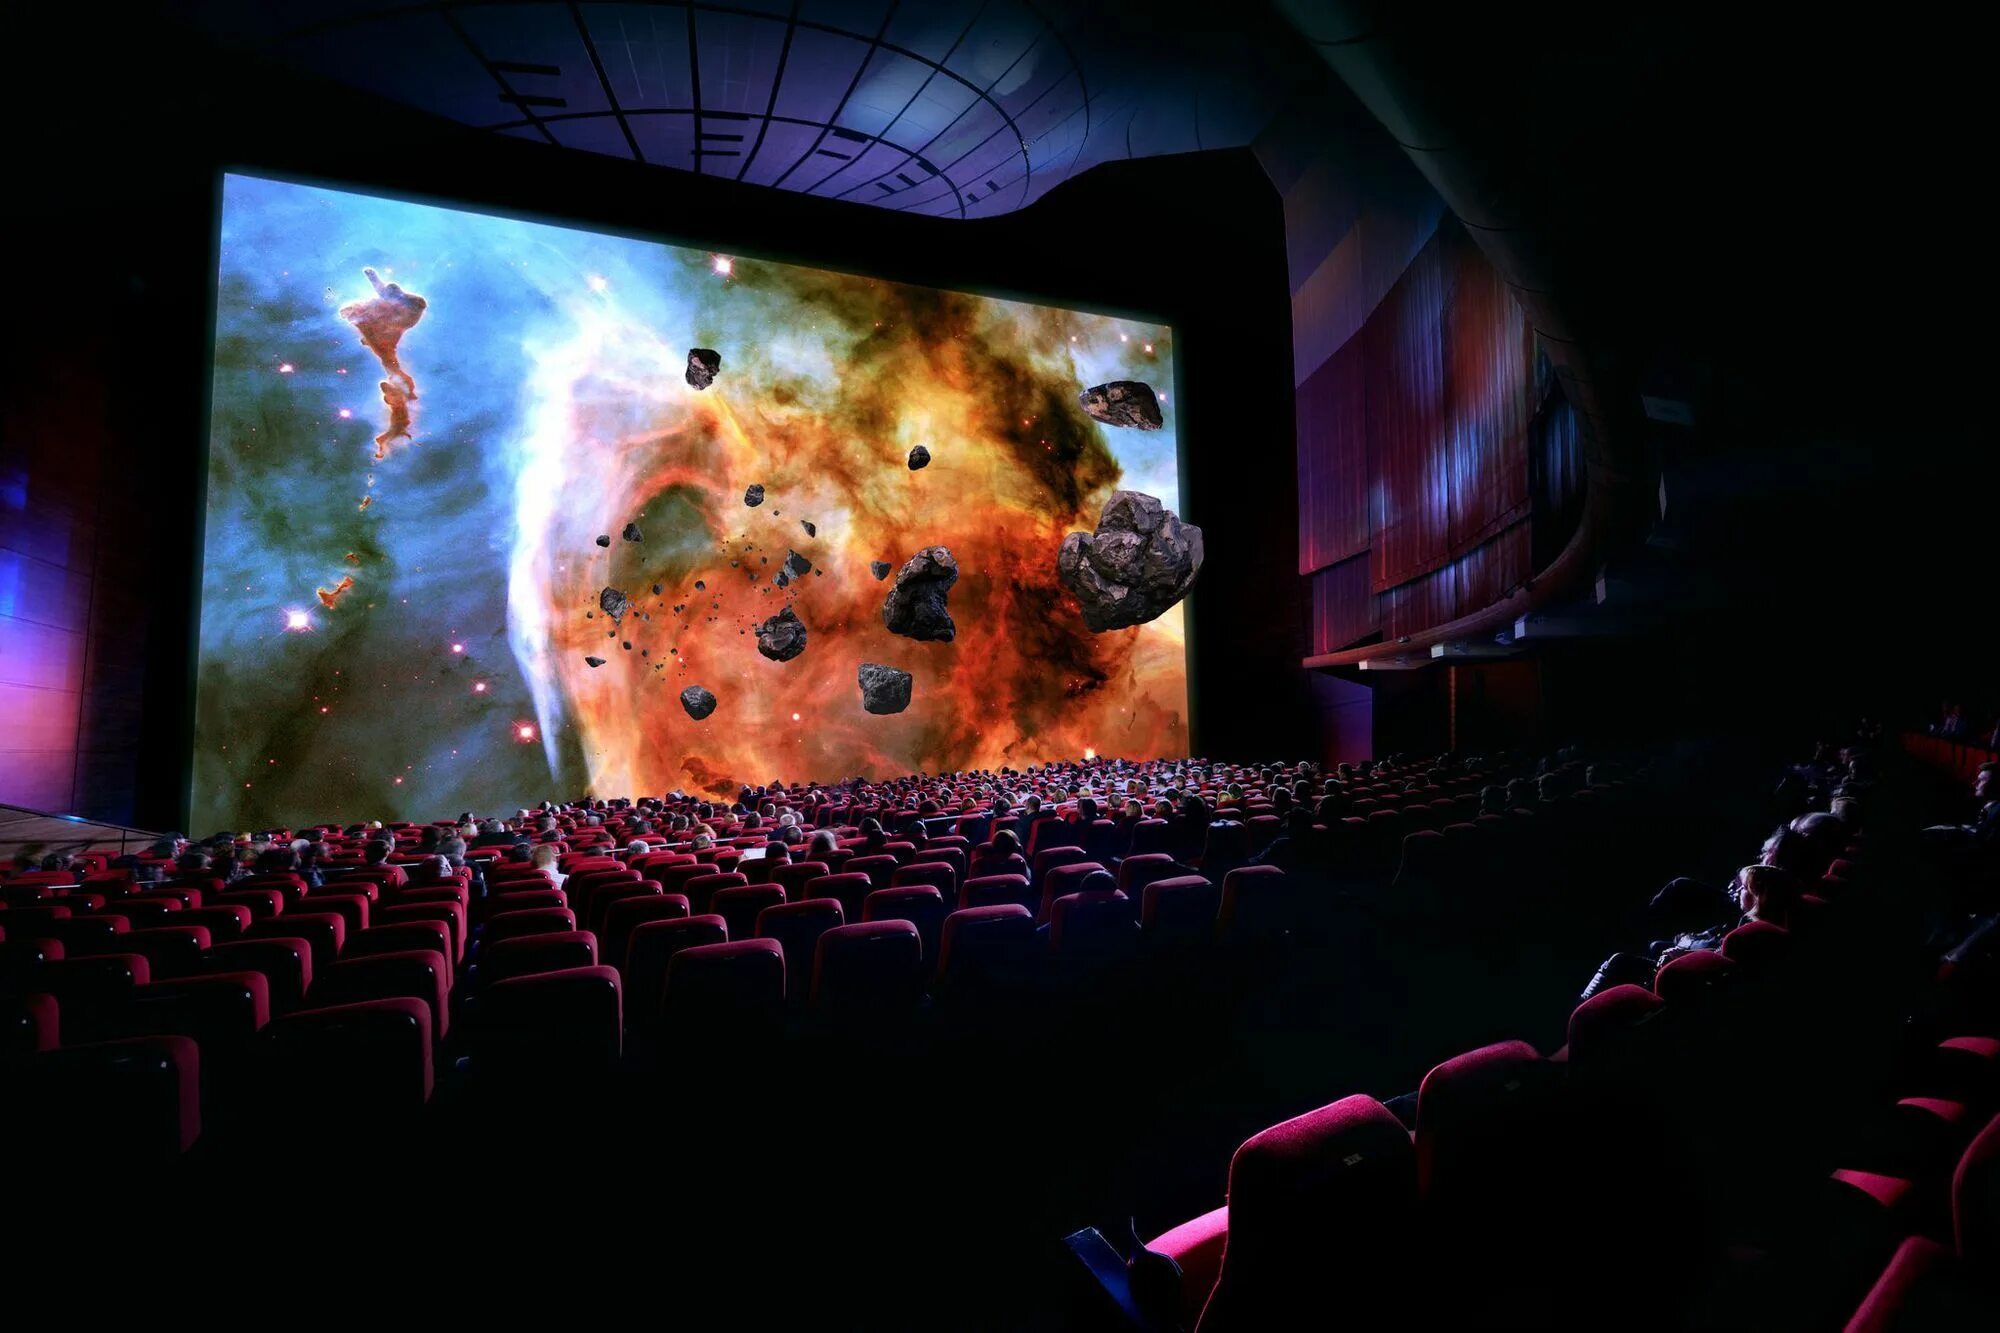 Лед 3 кинотеатр парк. IMAX 5d. 3д кинотеатр. Экран кинотеатра. Большой экран в кинотеатре.